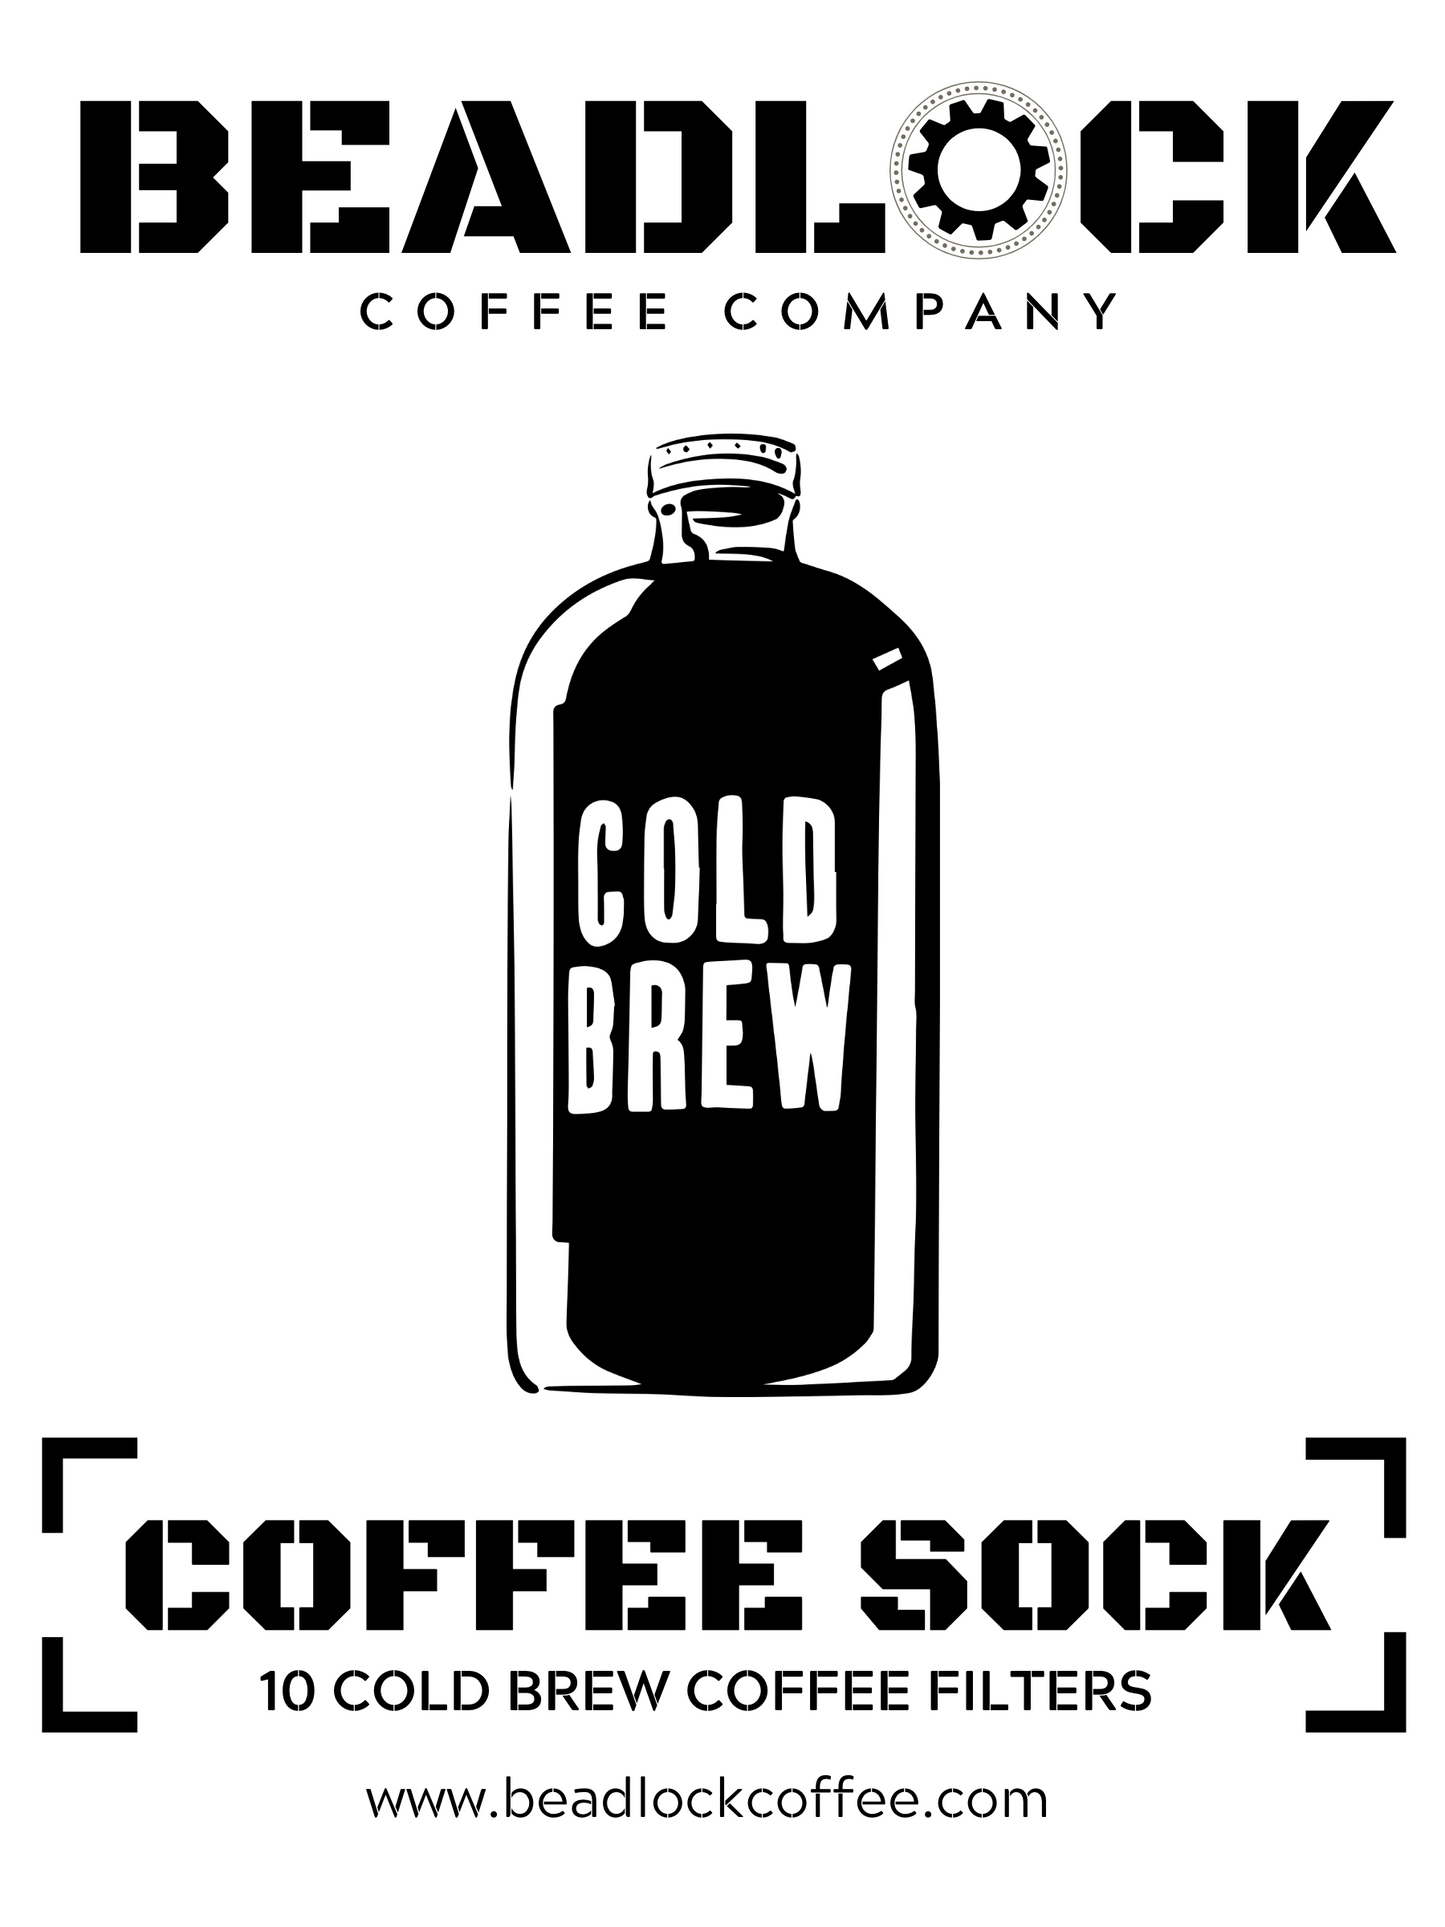 Coffee Socks - Cold Brew Filters